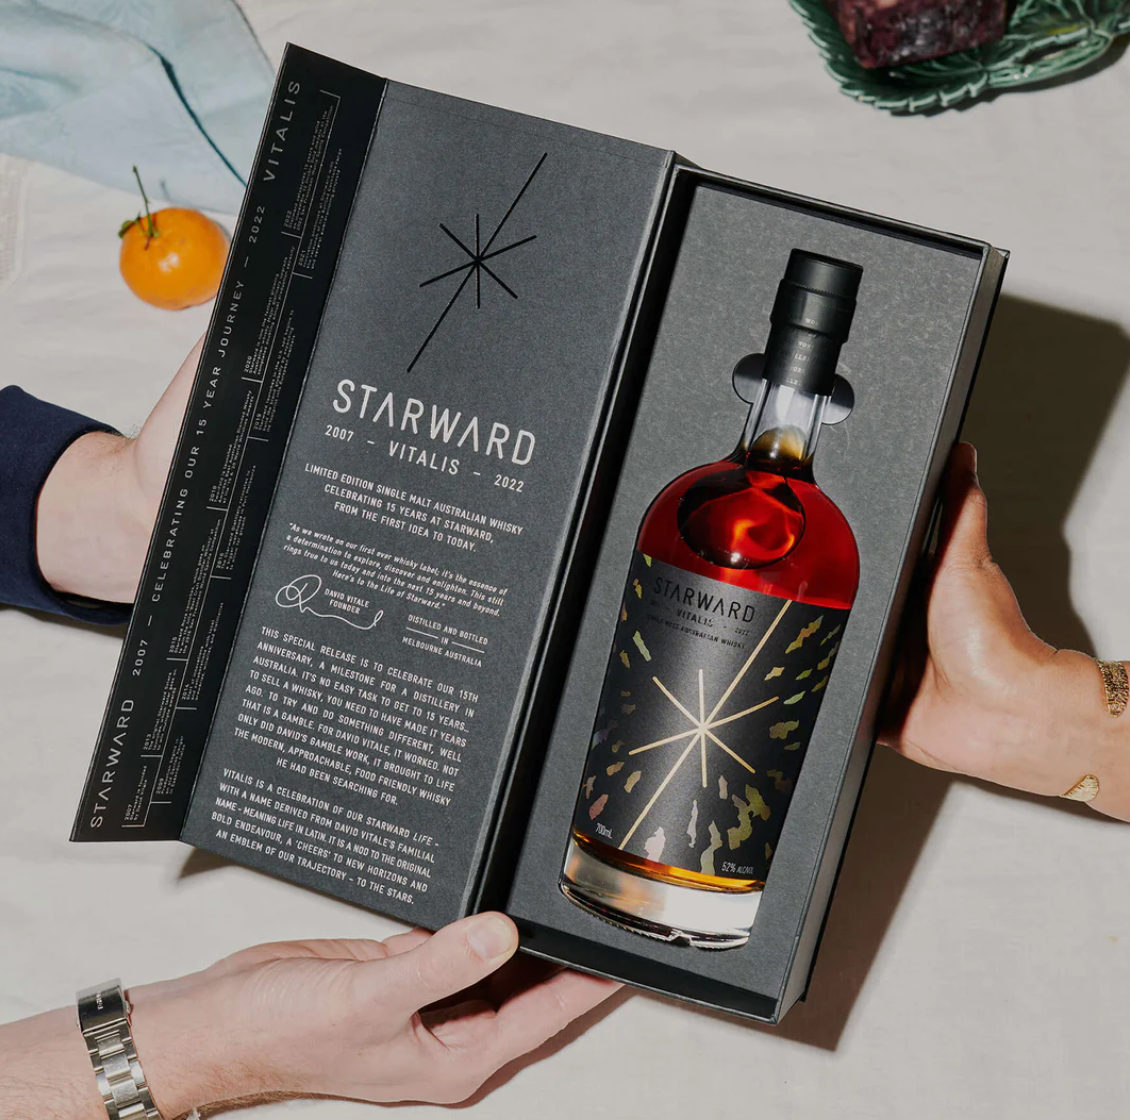 Starward Vitalis Single Malt Australian Whisky (Limited Edition)